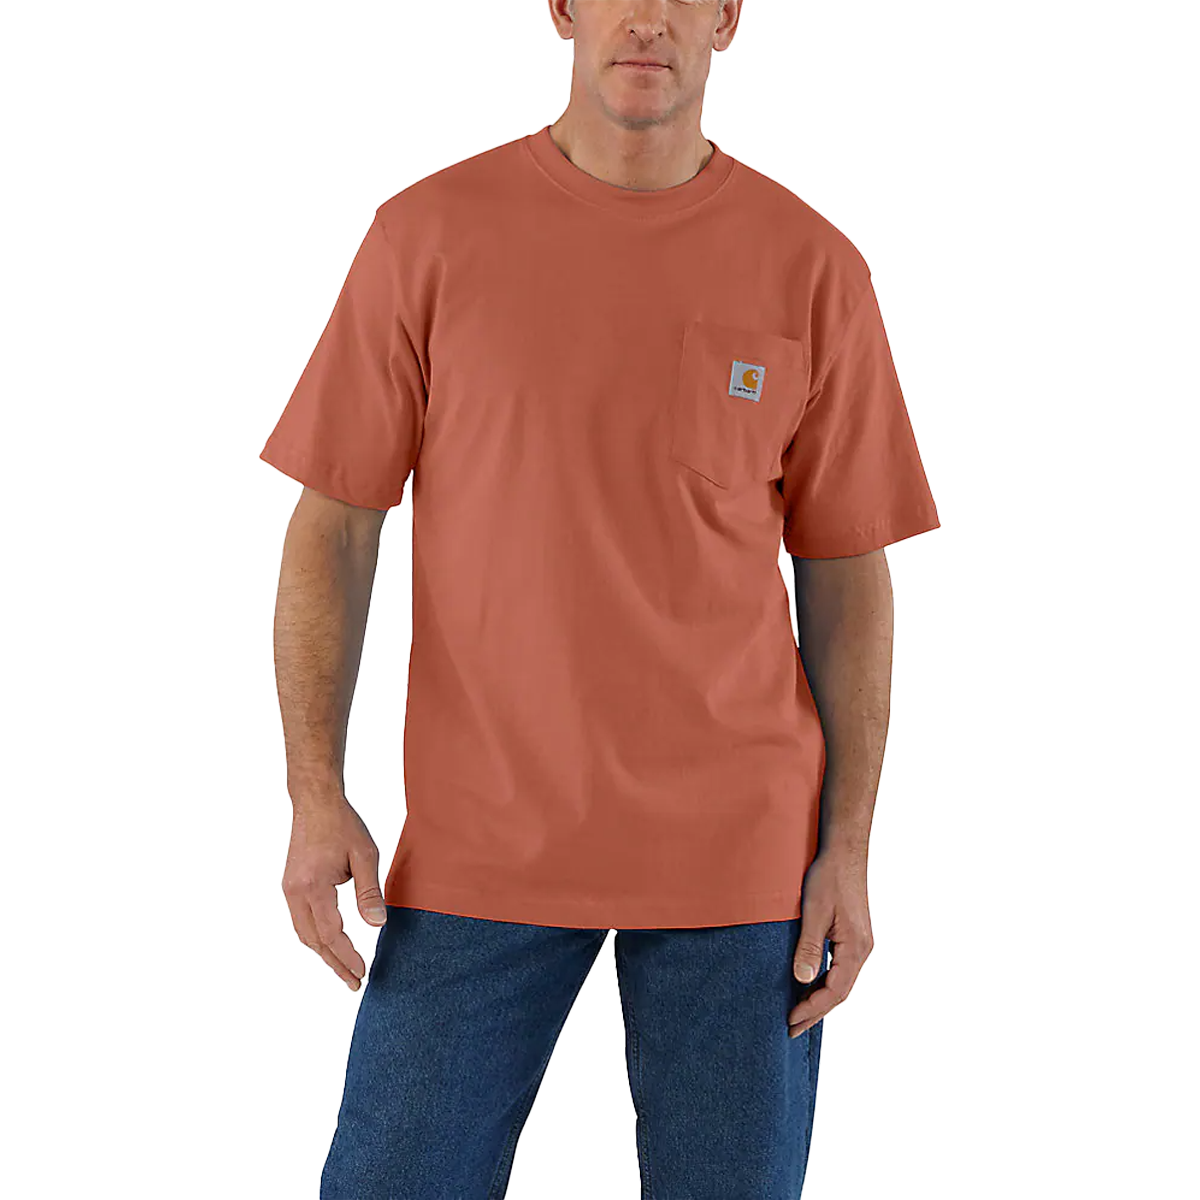 Men's Short-Sleeve Workwear Pocket T-Shirt alternate view